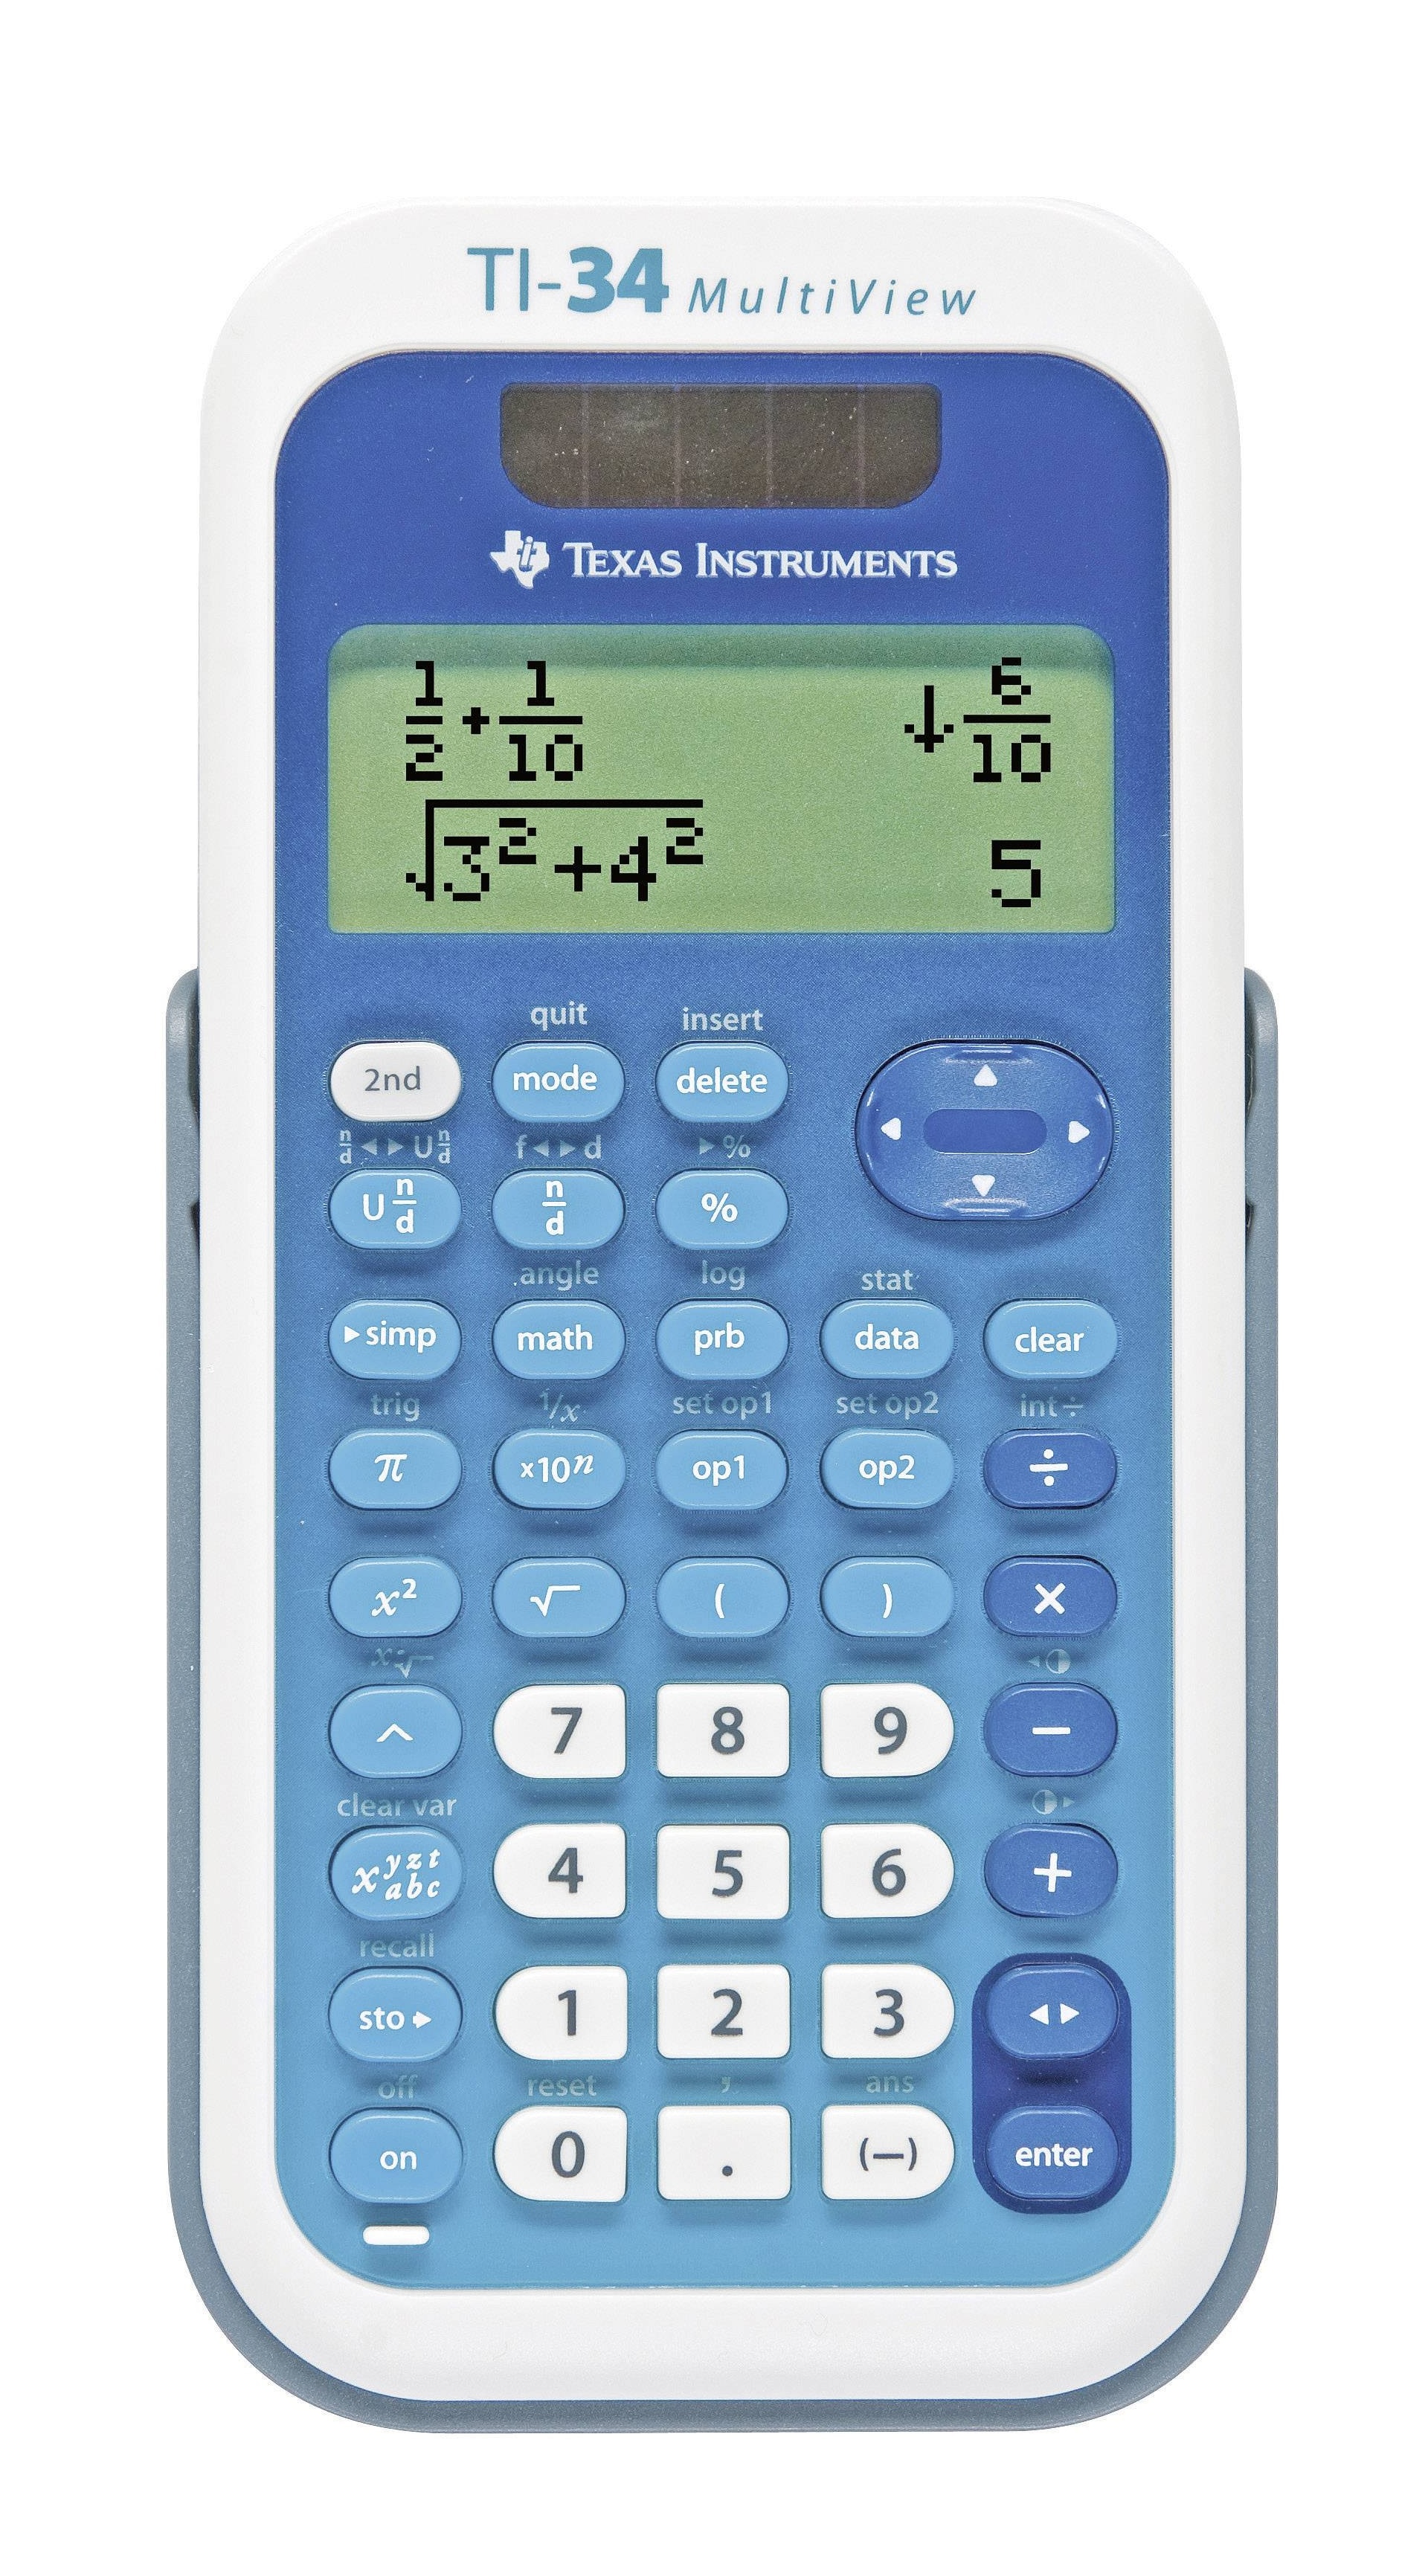 Texas Instruments TI-34 MultiView Calculator